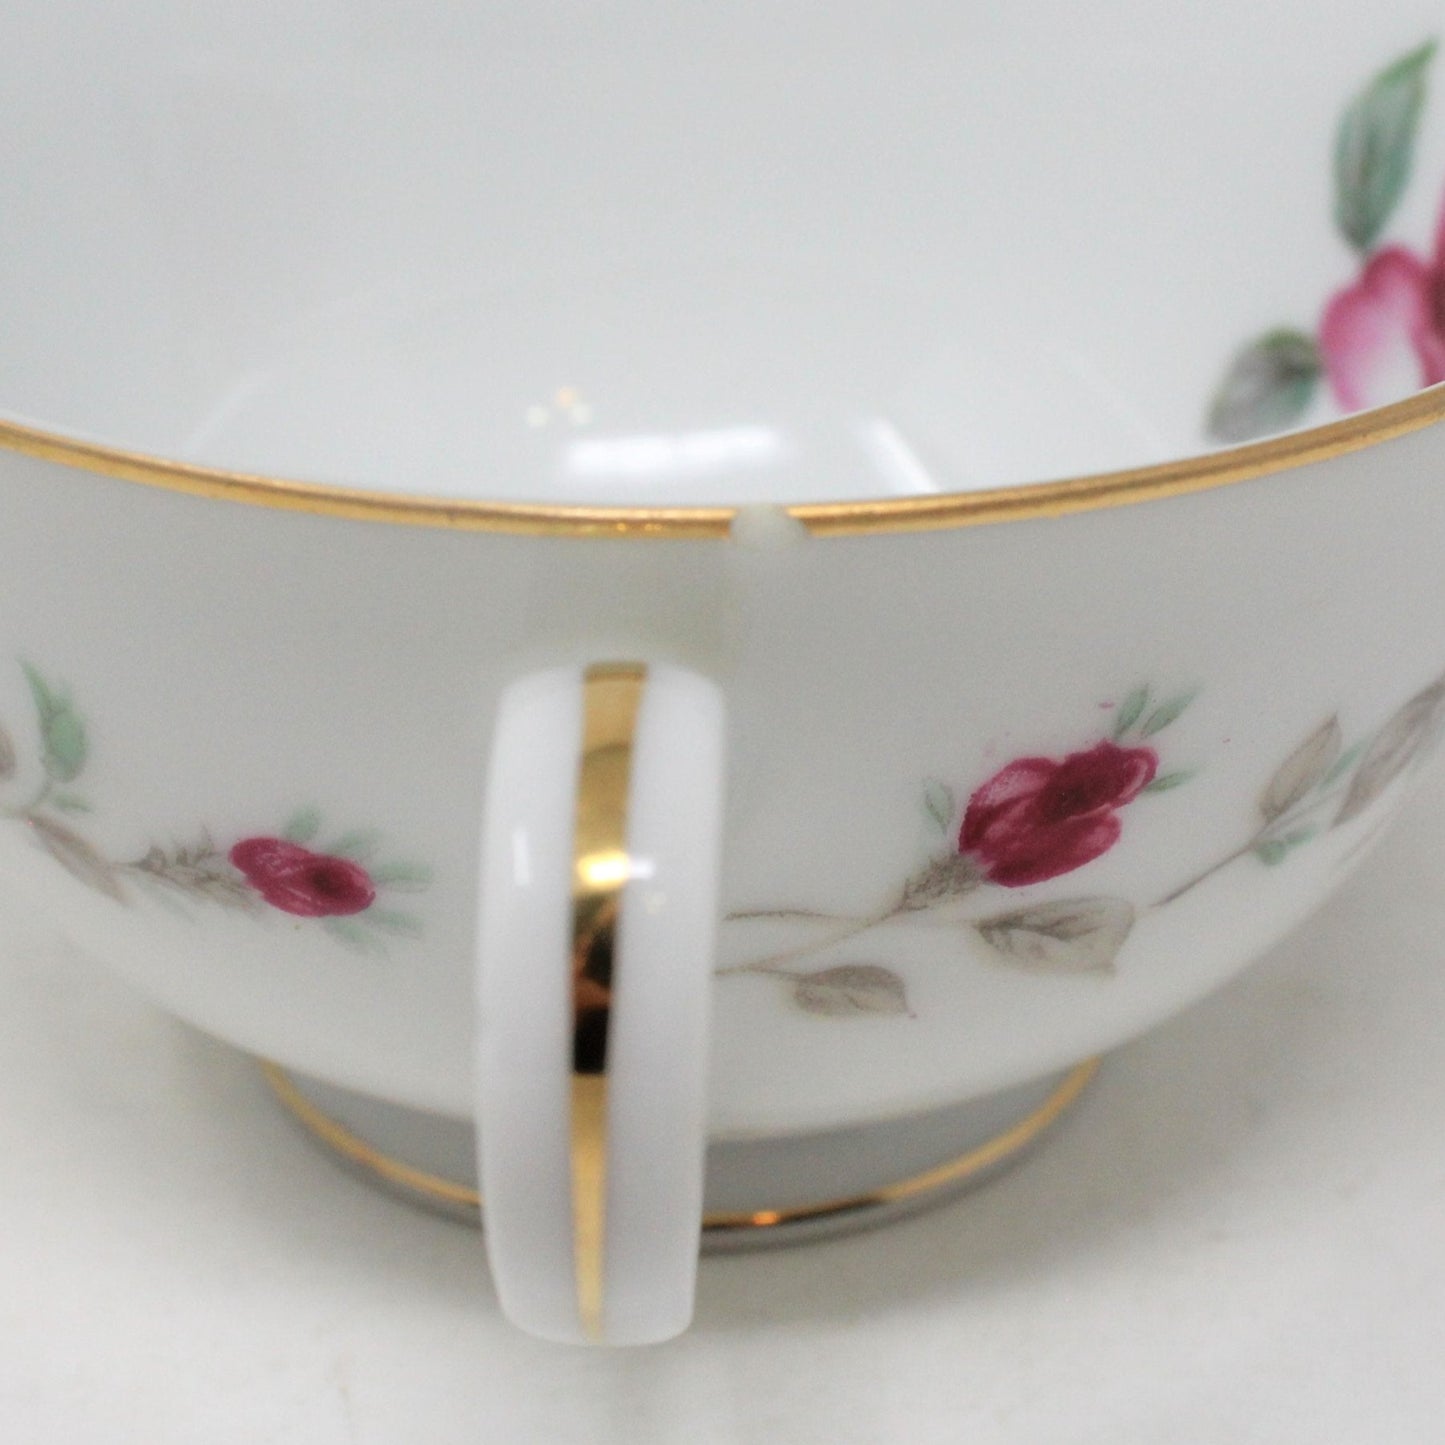 Teacup and Saucer, Diamond China, Moss Rose, Vintage Japan